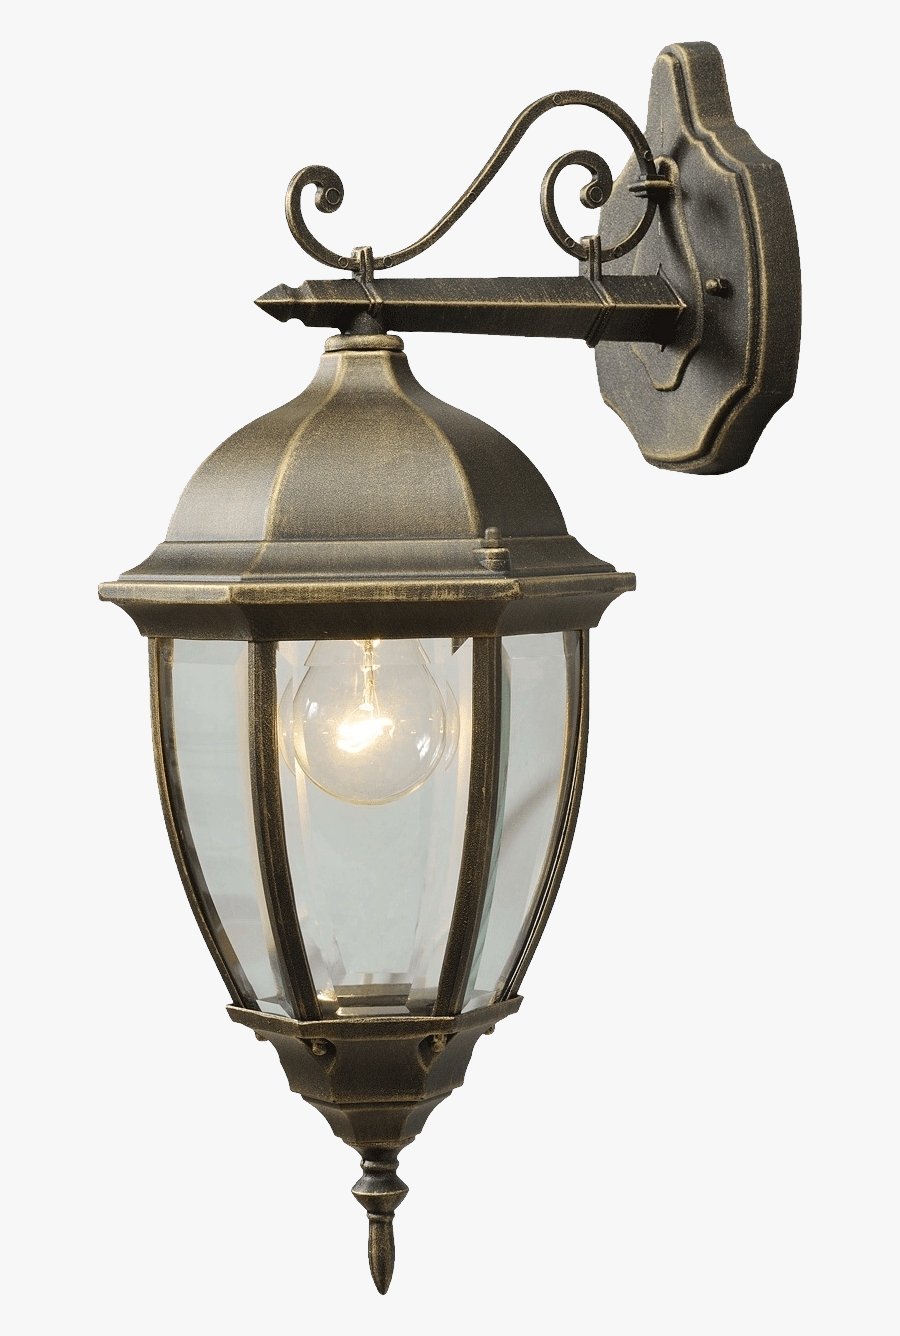 Night Street Lamp Png, Transparent Clipart